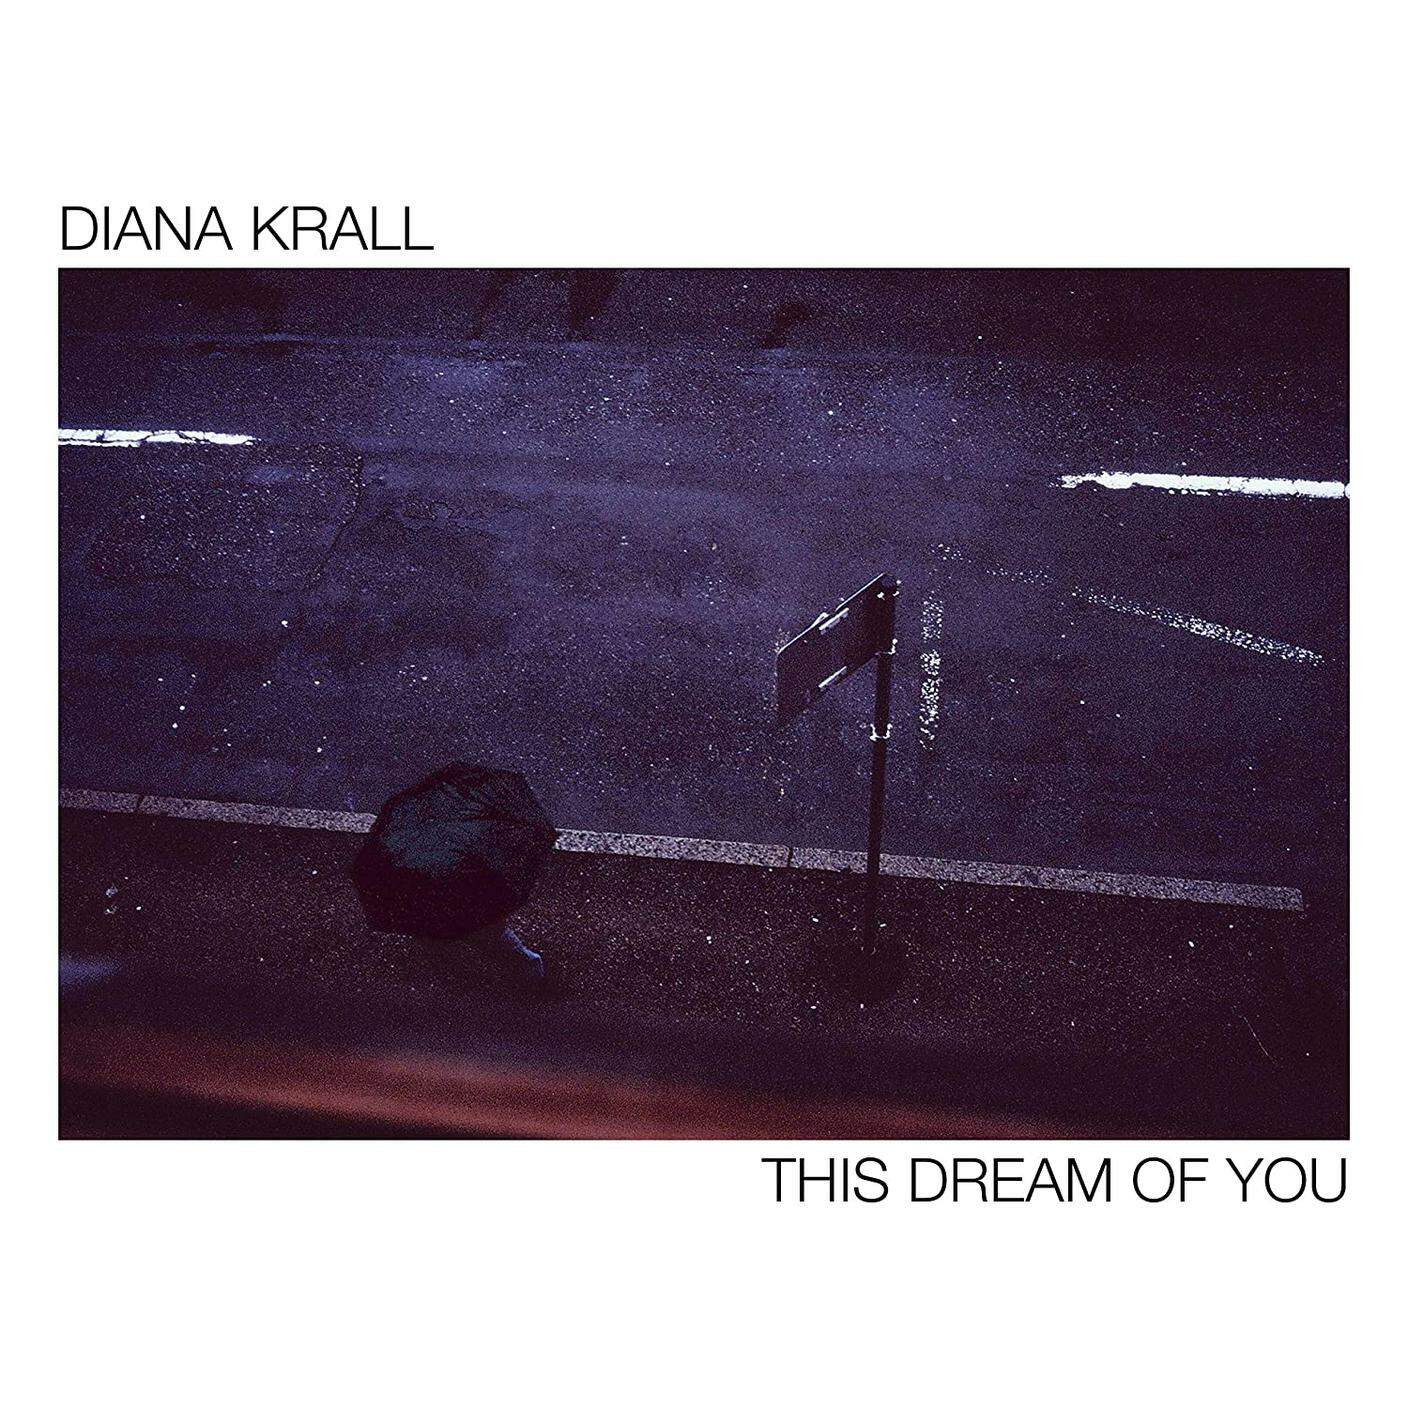 Diana Krall, "This dream of you", Capitol Studios (dettaglio copertina)